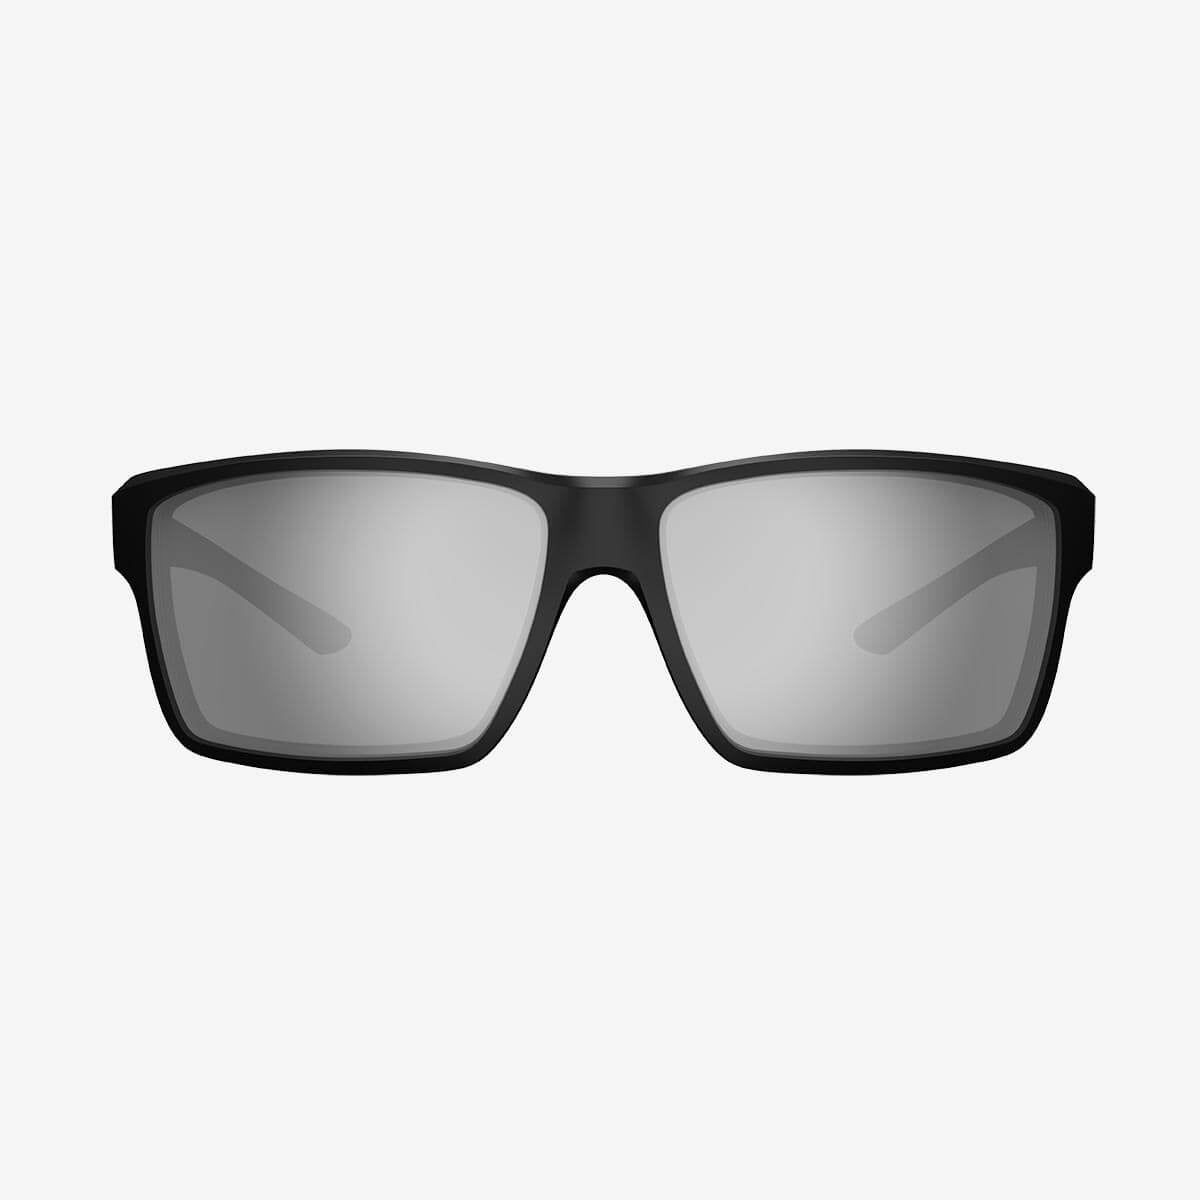 Magpul - Explorer Eyewear, Polarized - Black Frame, Gray Lens/Silver Mirror